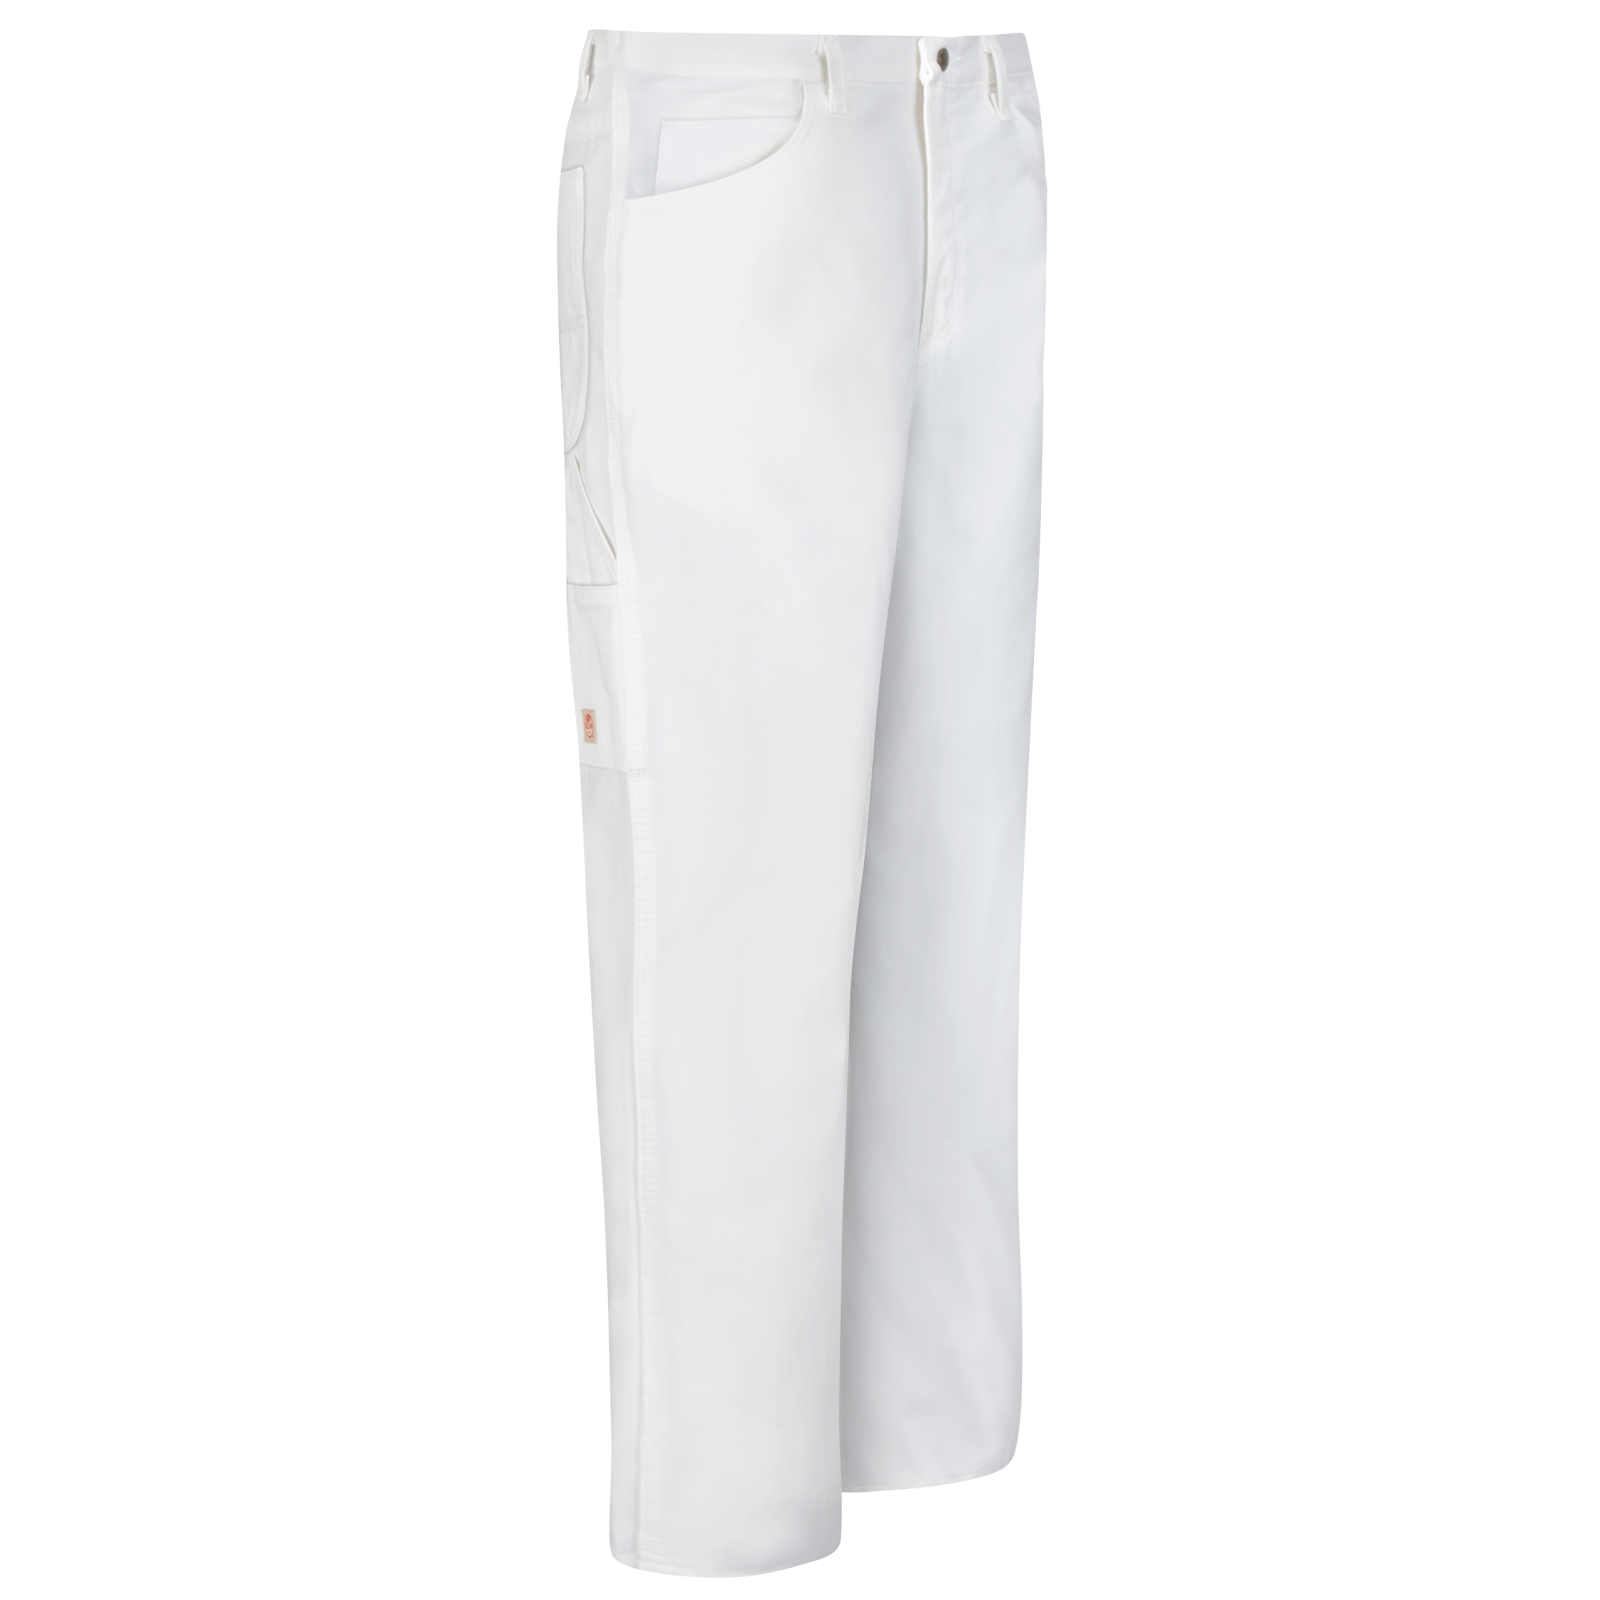 white skirt dungarees